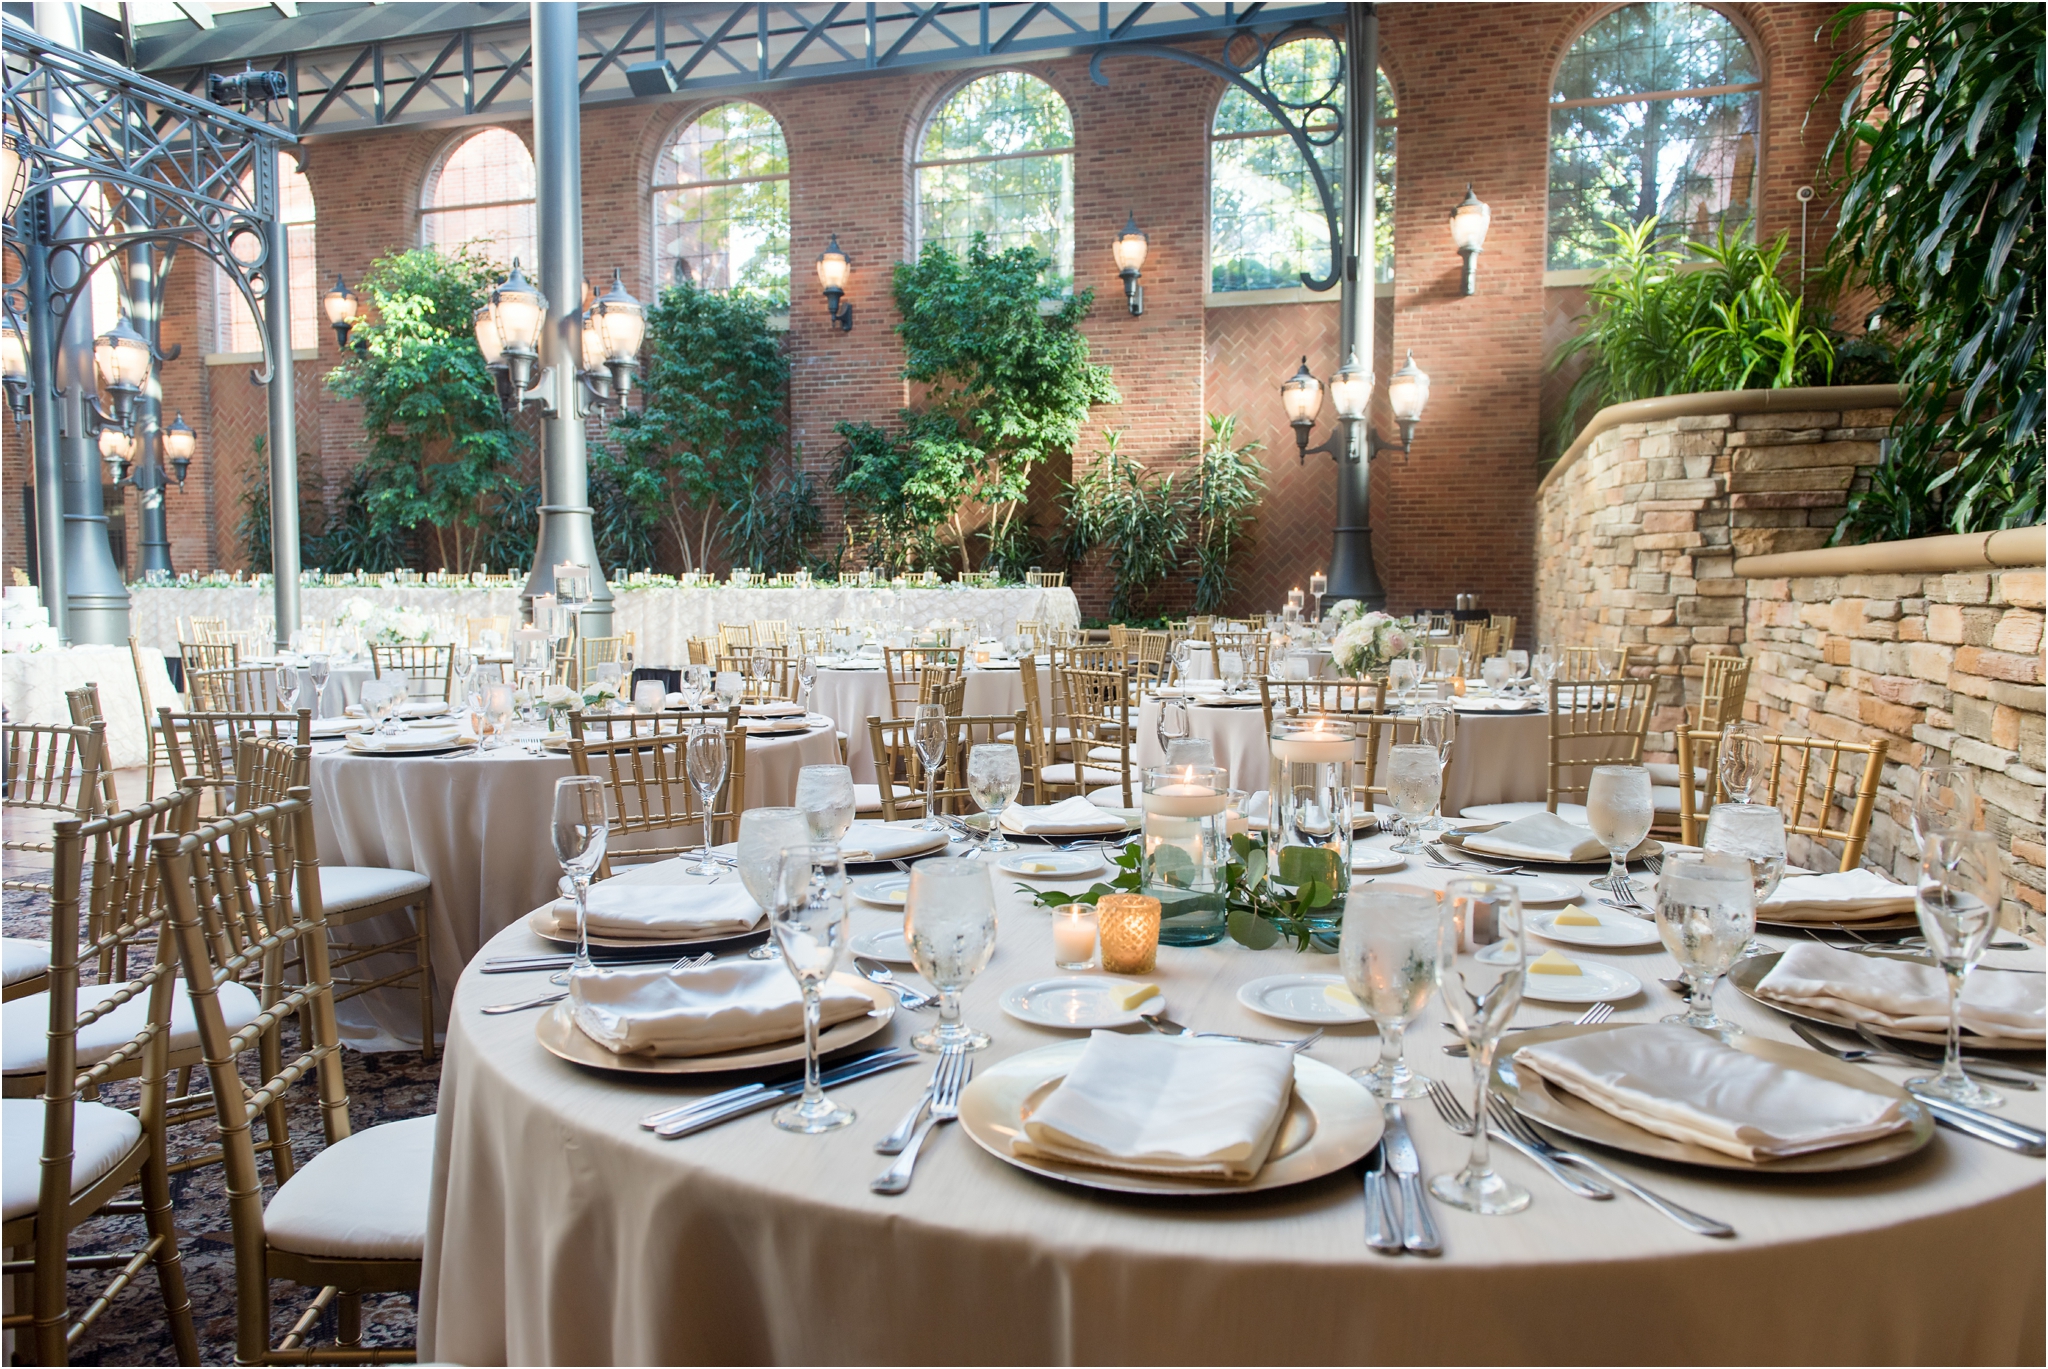 The Inn at St. Johns | Sarah & Rachel Wedding Photographers | plymouth, Mi wedding | gold reception details